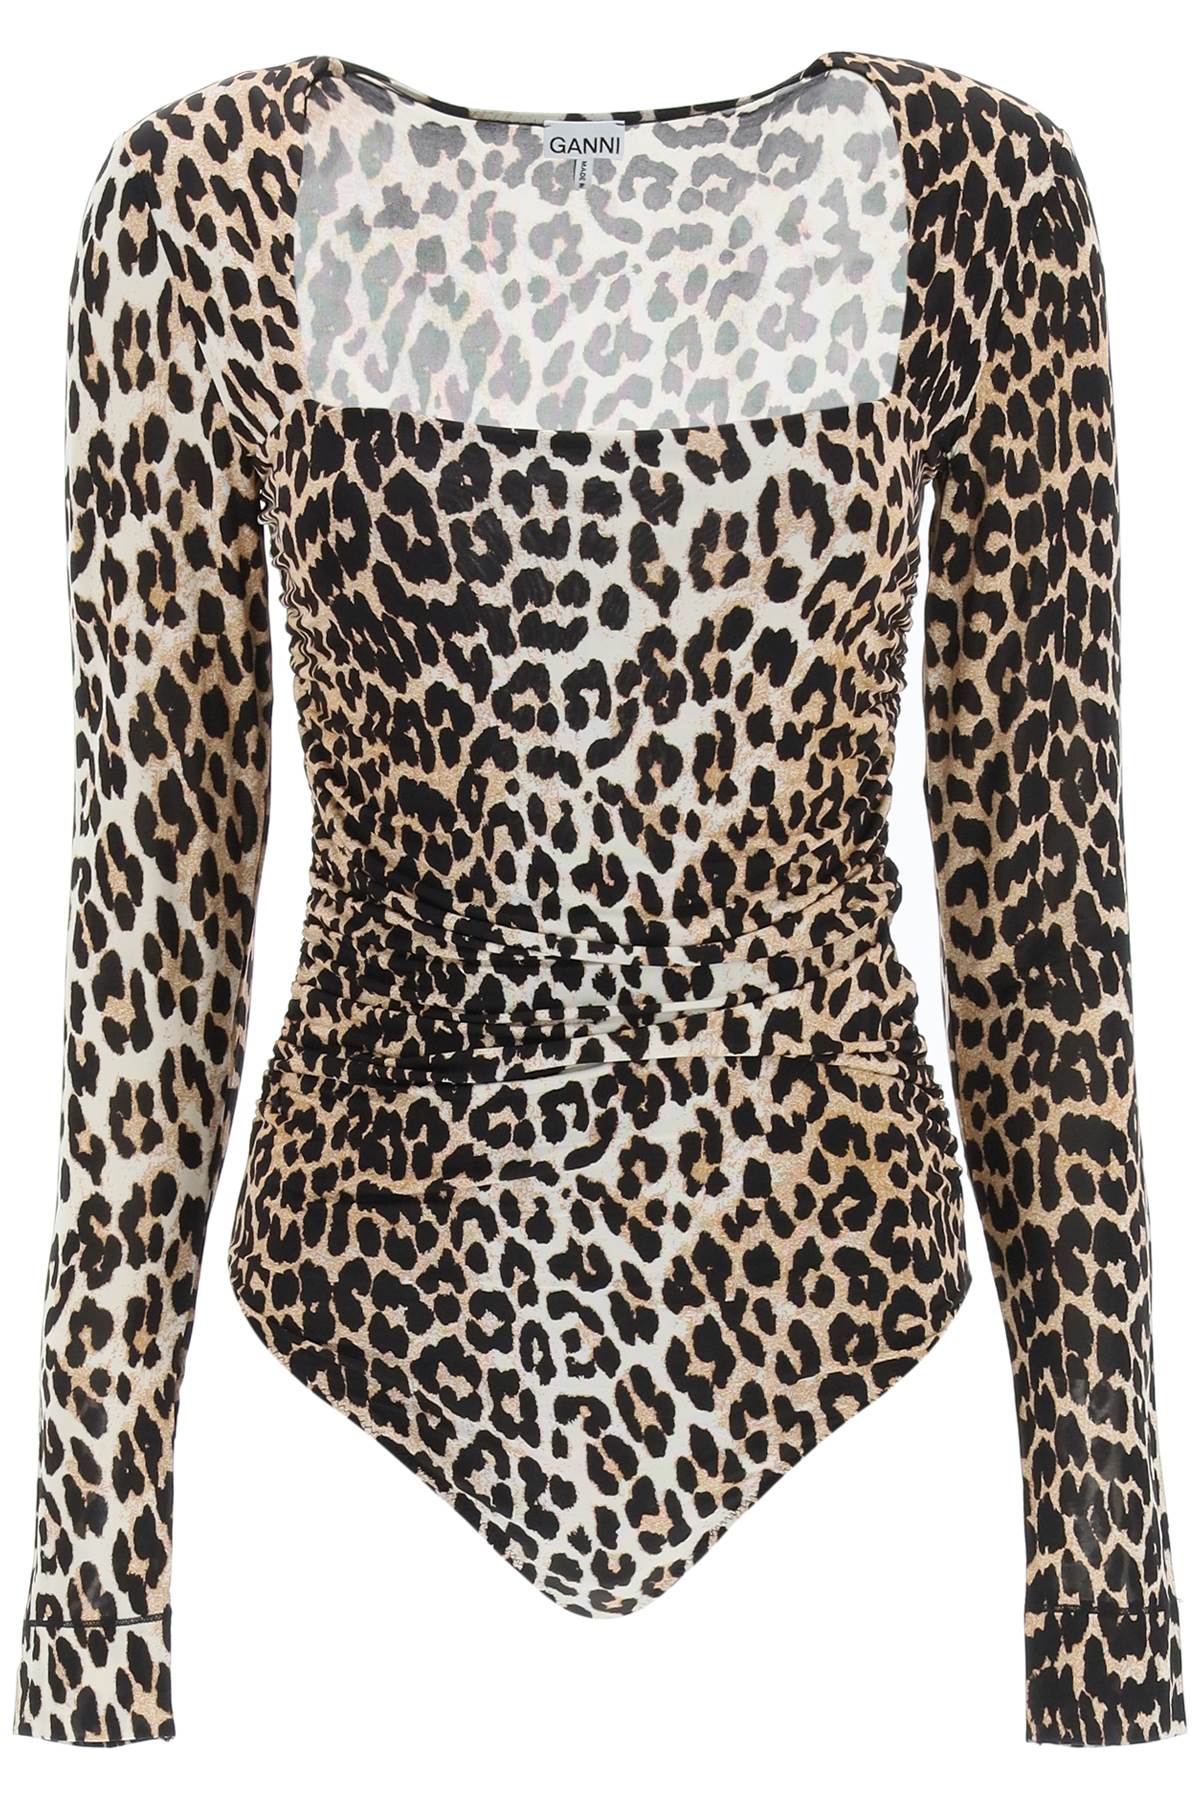 Ganni Leopard Print Bodysuit